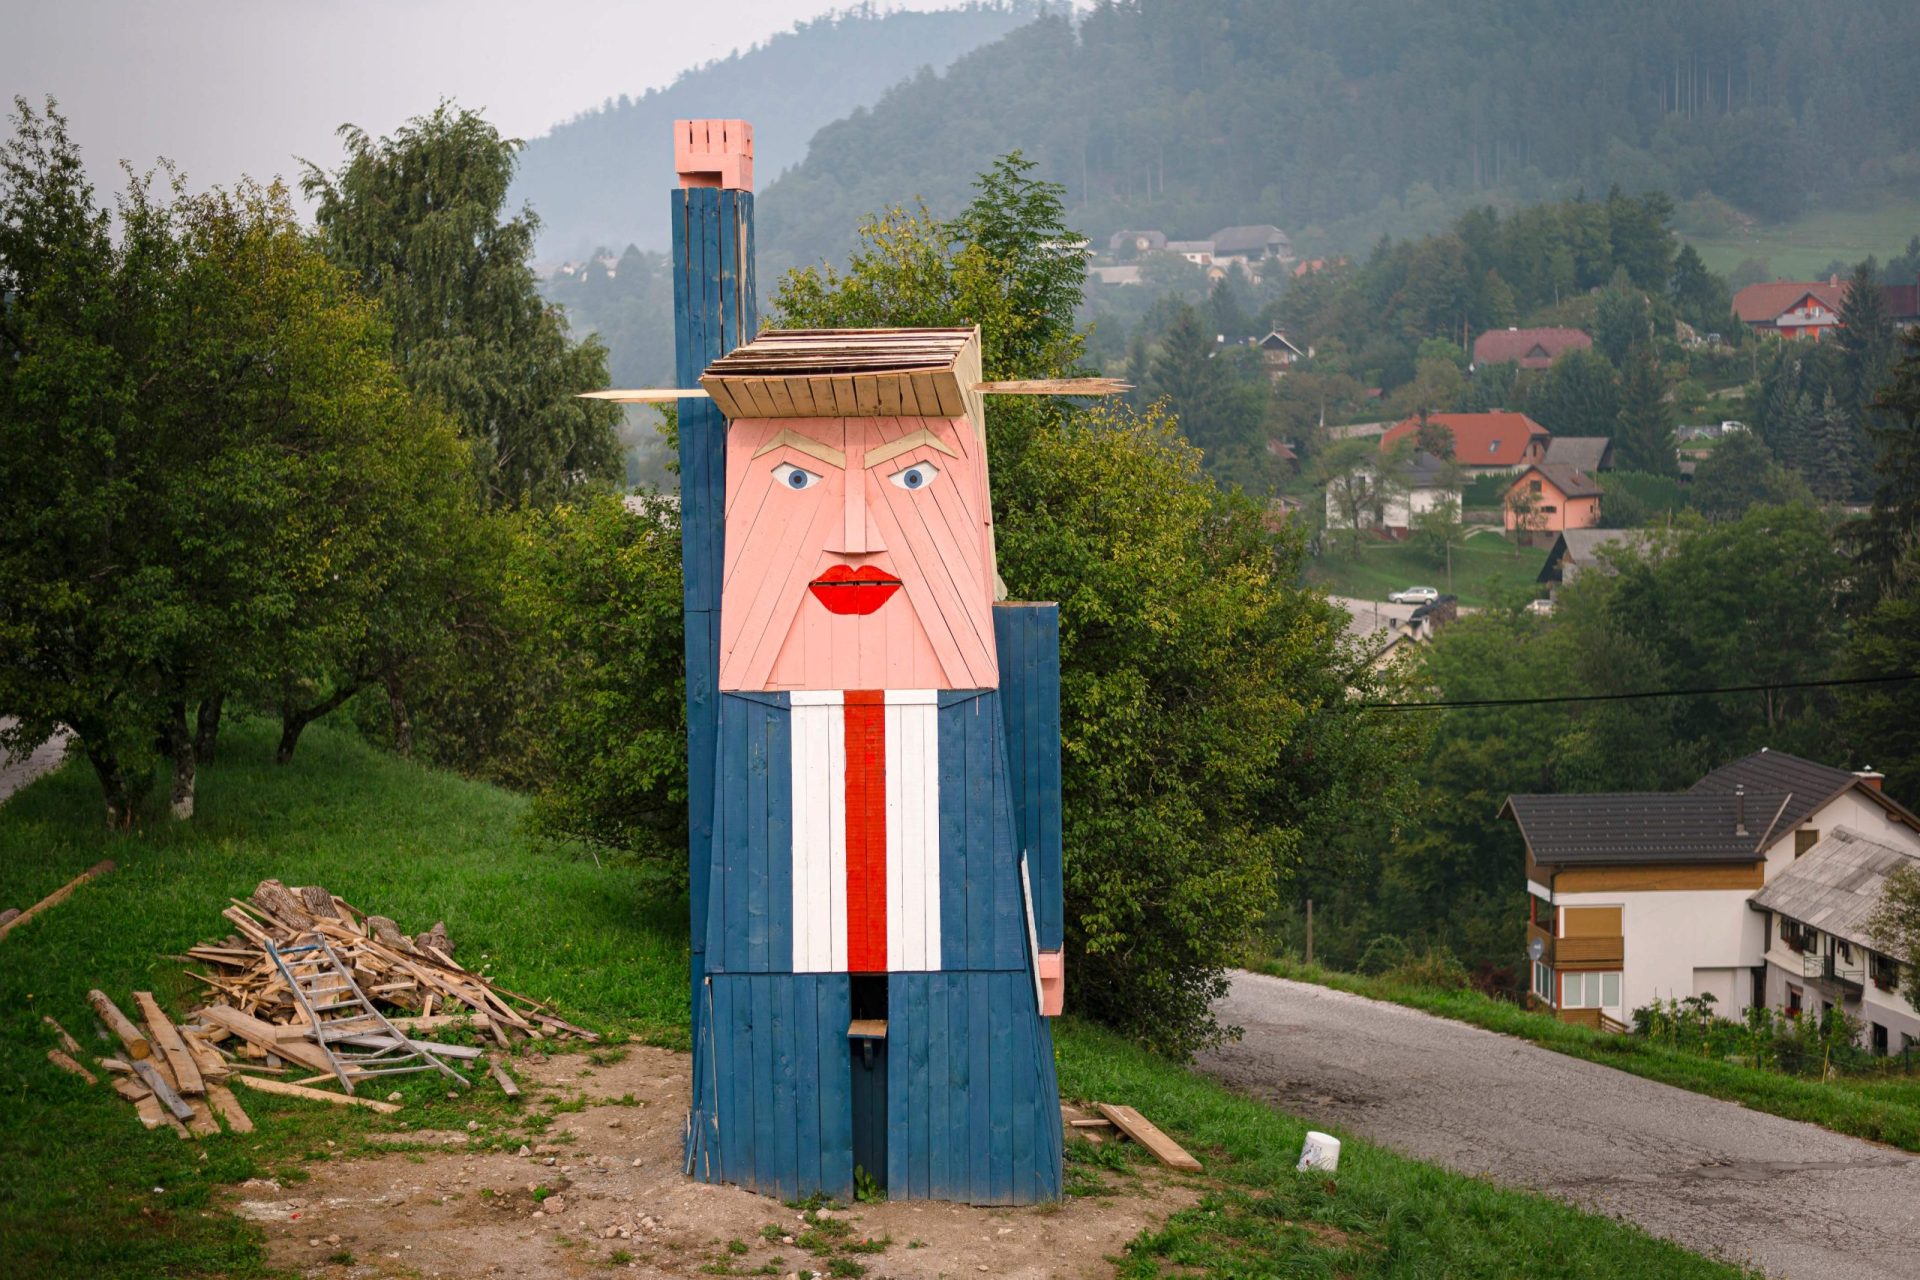 Artista constrói “Donald Trump” nazi na Eslovénia